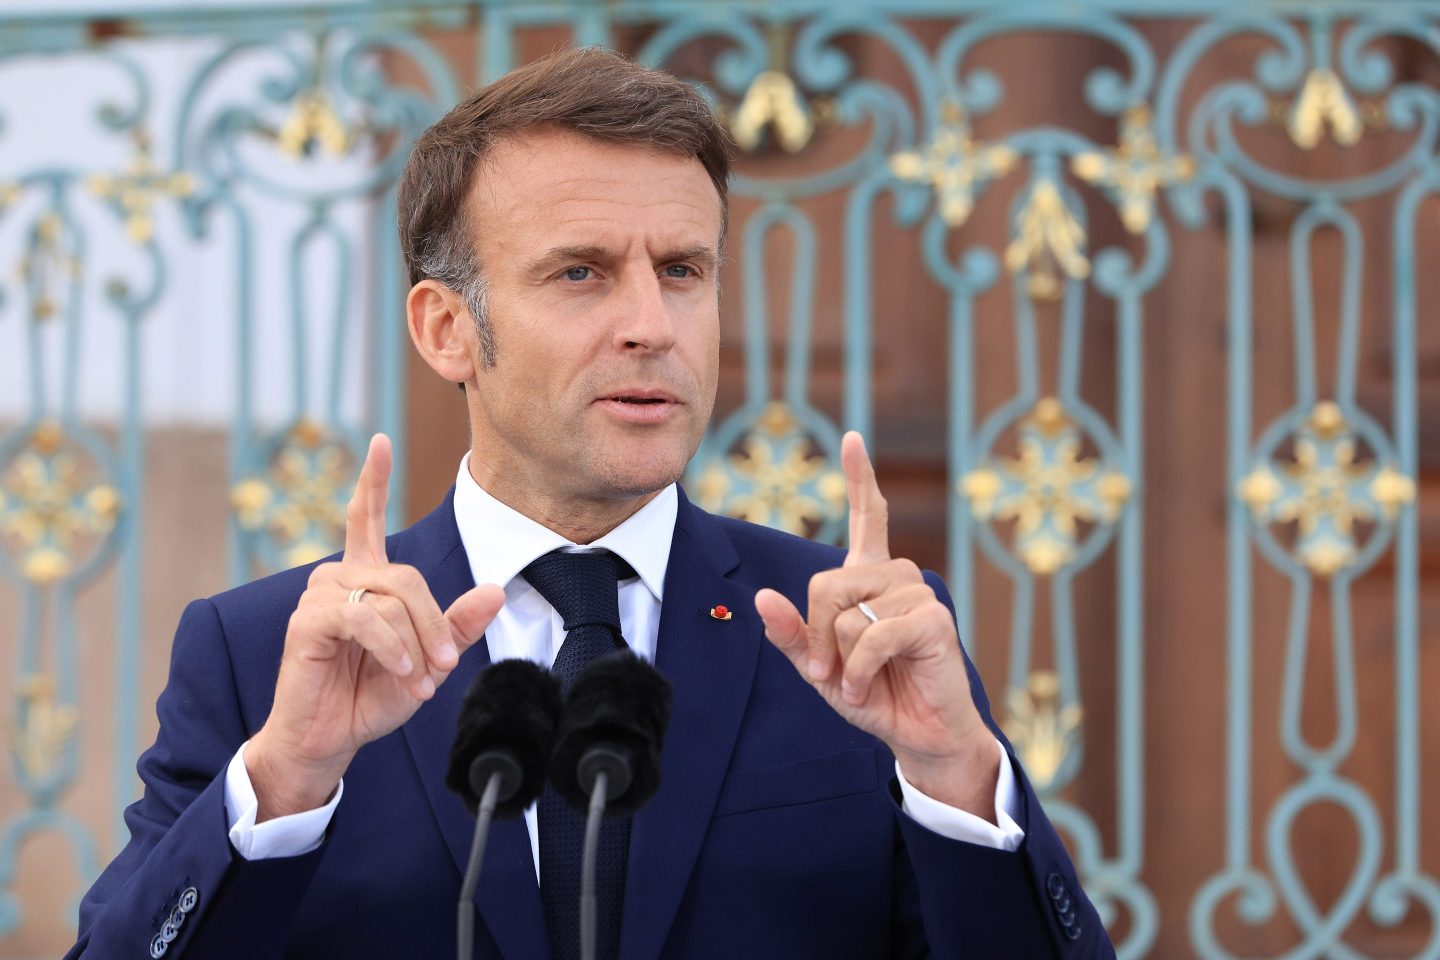 Emmanuel Macron gestures with hands while speaking